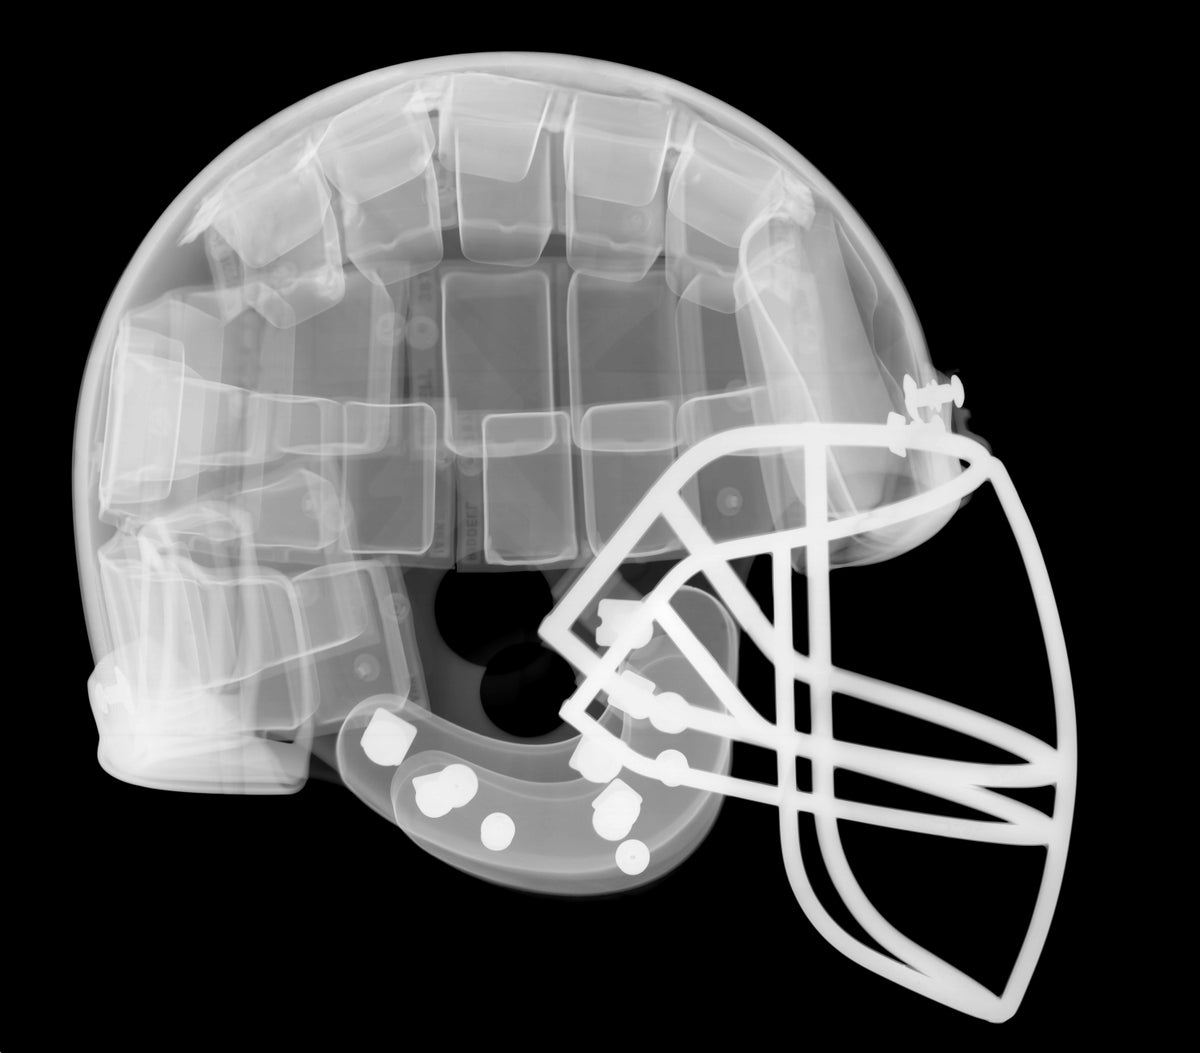 What Makes A Football Helmet?